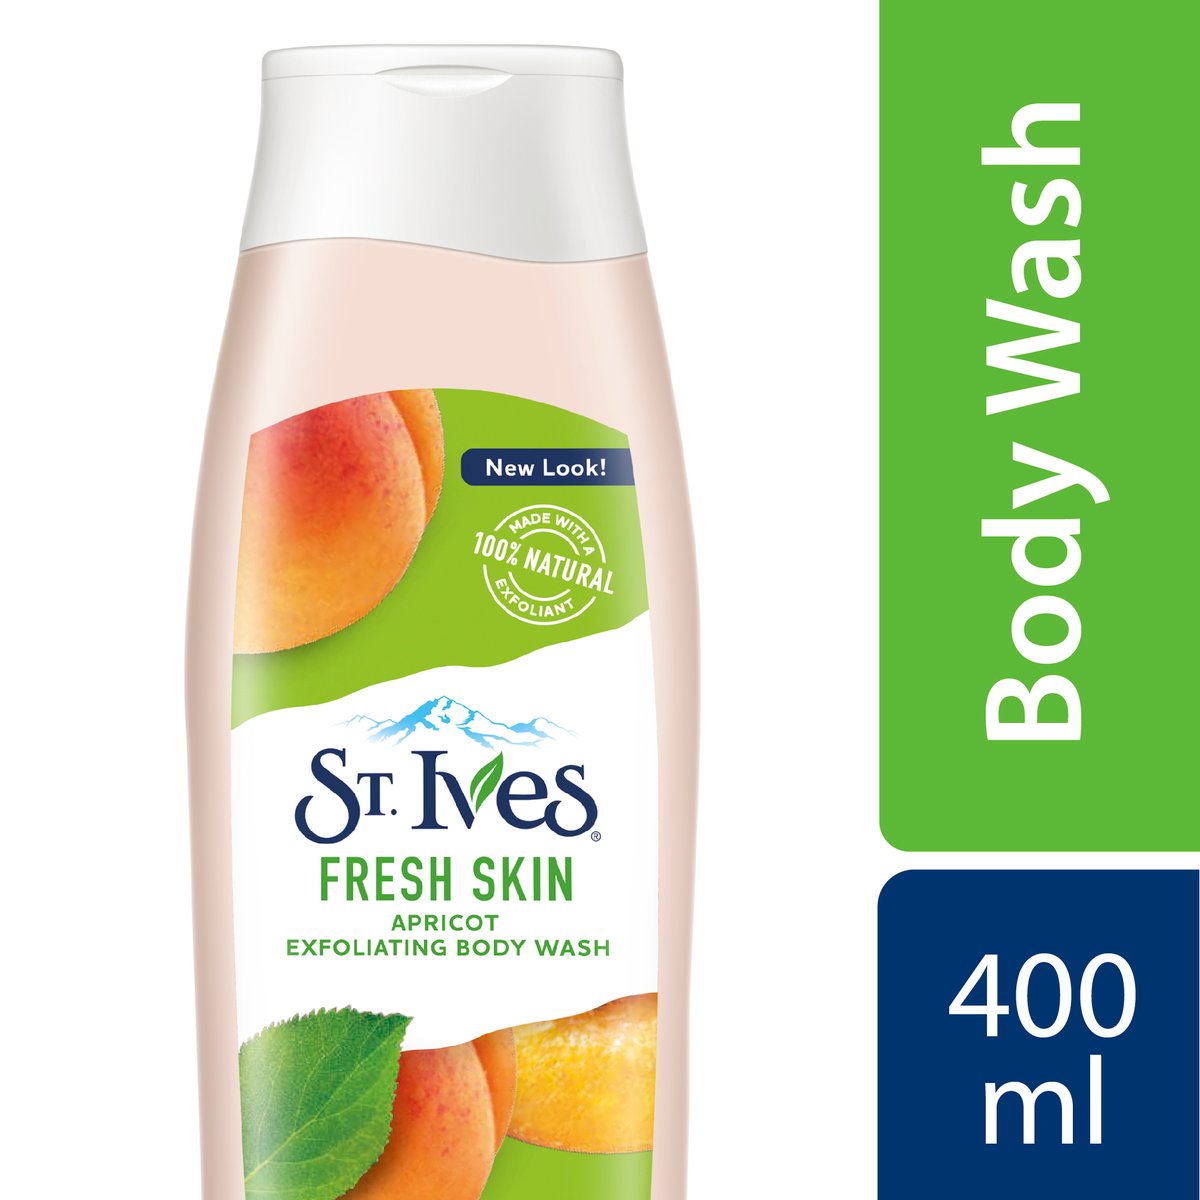 St Ives Fresh Skin Apricot Body Wash 400 ml